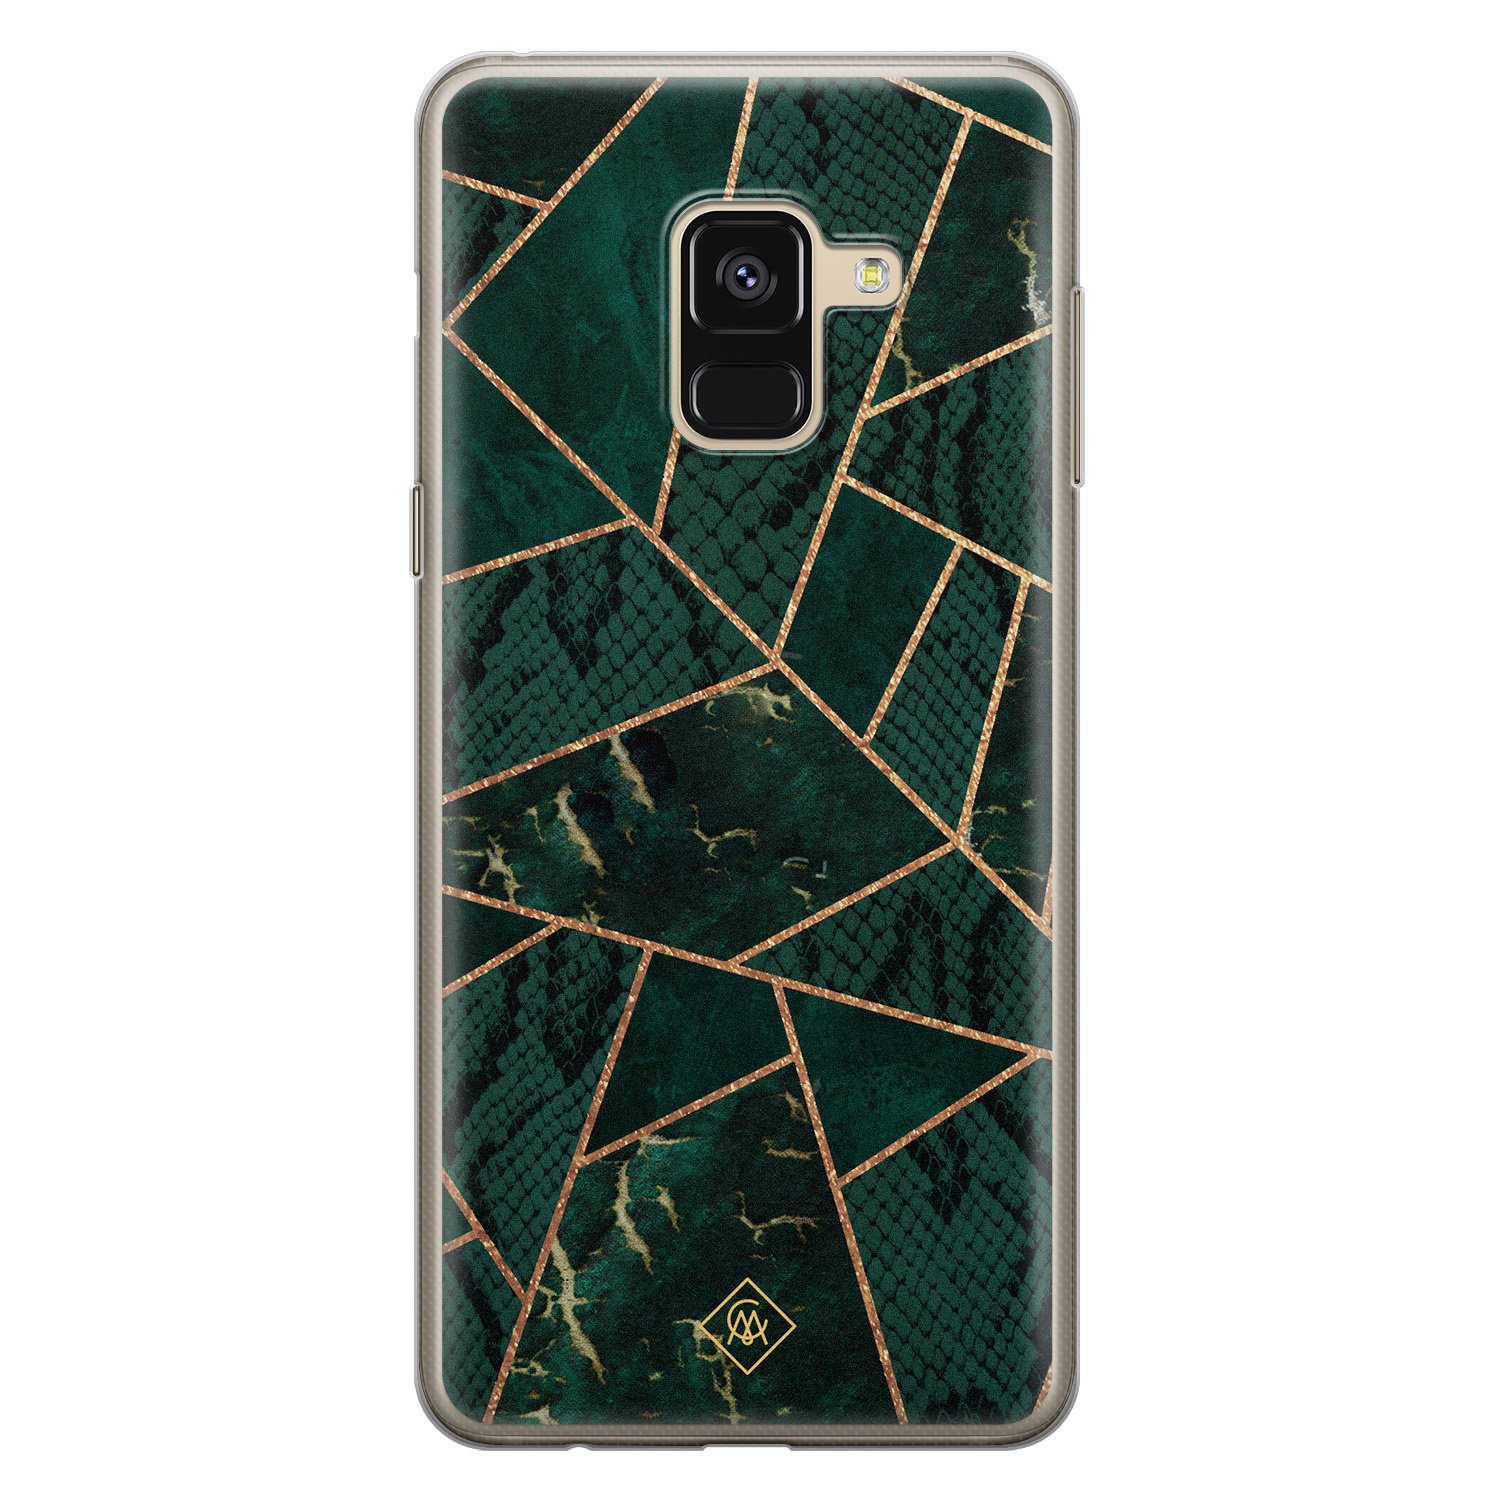 Samsung Galaxy A8 (2018) siliconen hoesje - Abstract groen